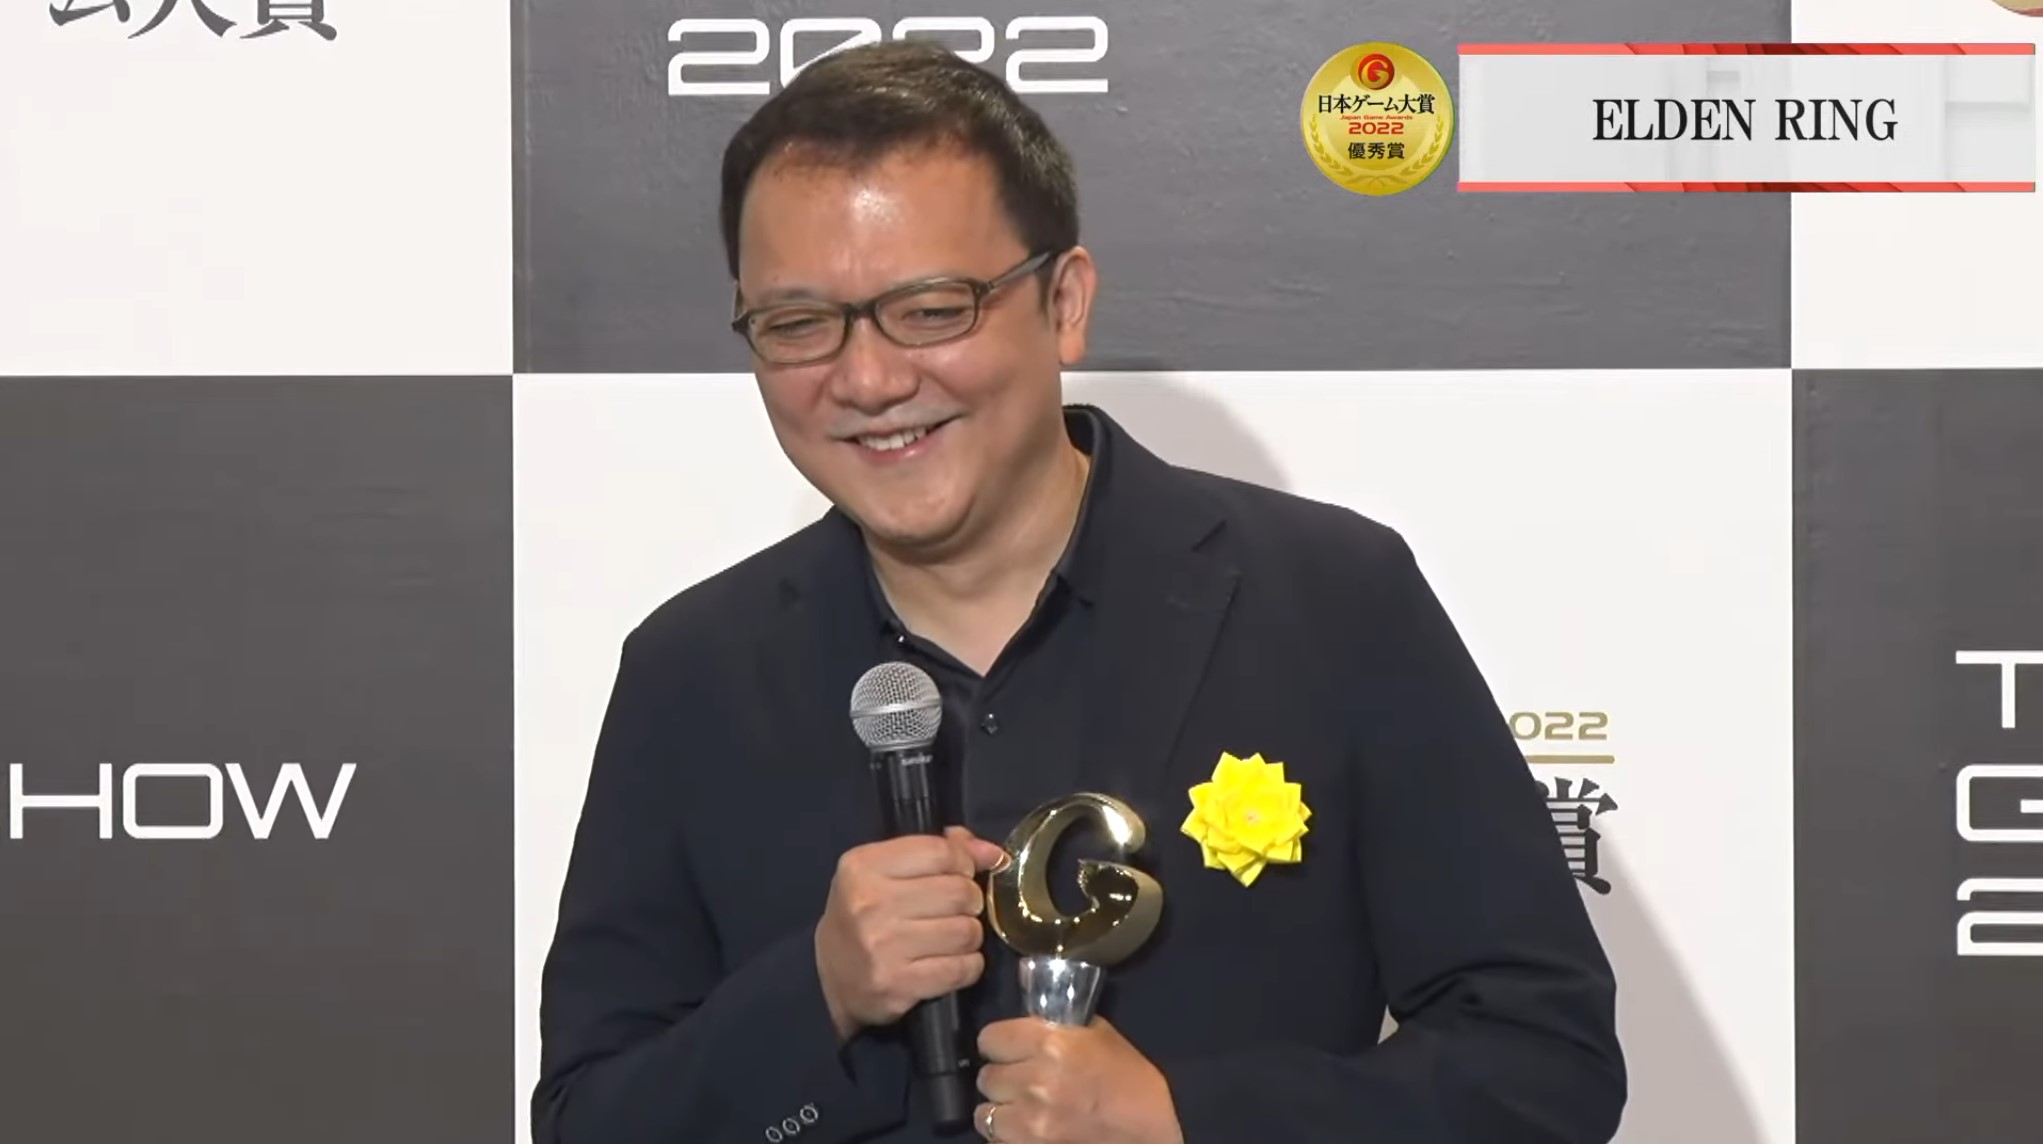 Elden Ring gana su primer GOTY 2022 en los Japanese Game Awards 2022 del  Tokyo Game